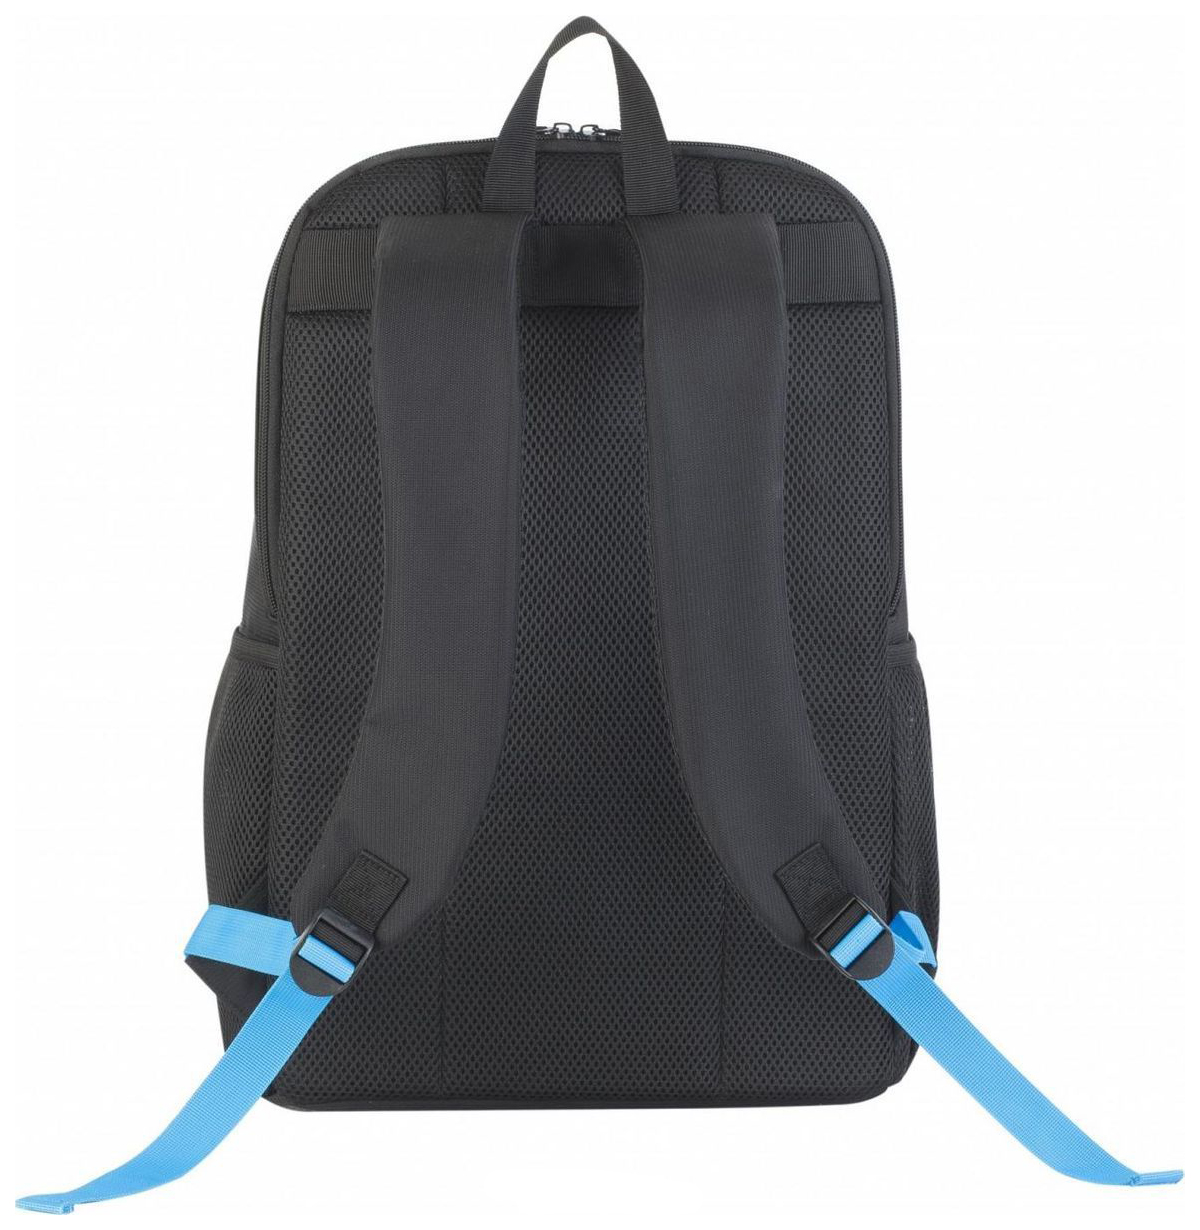 Рюкзак для ноутбука RivaCase 8067 Black